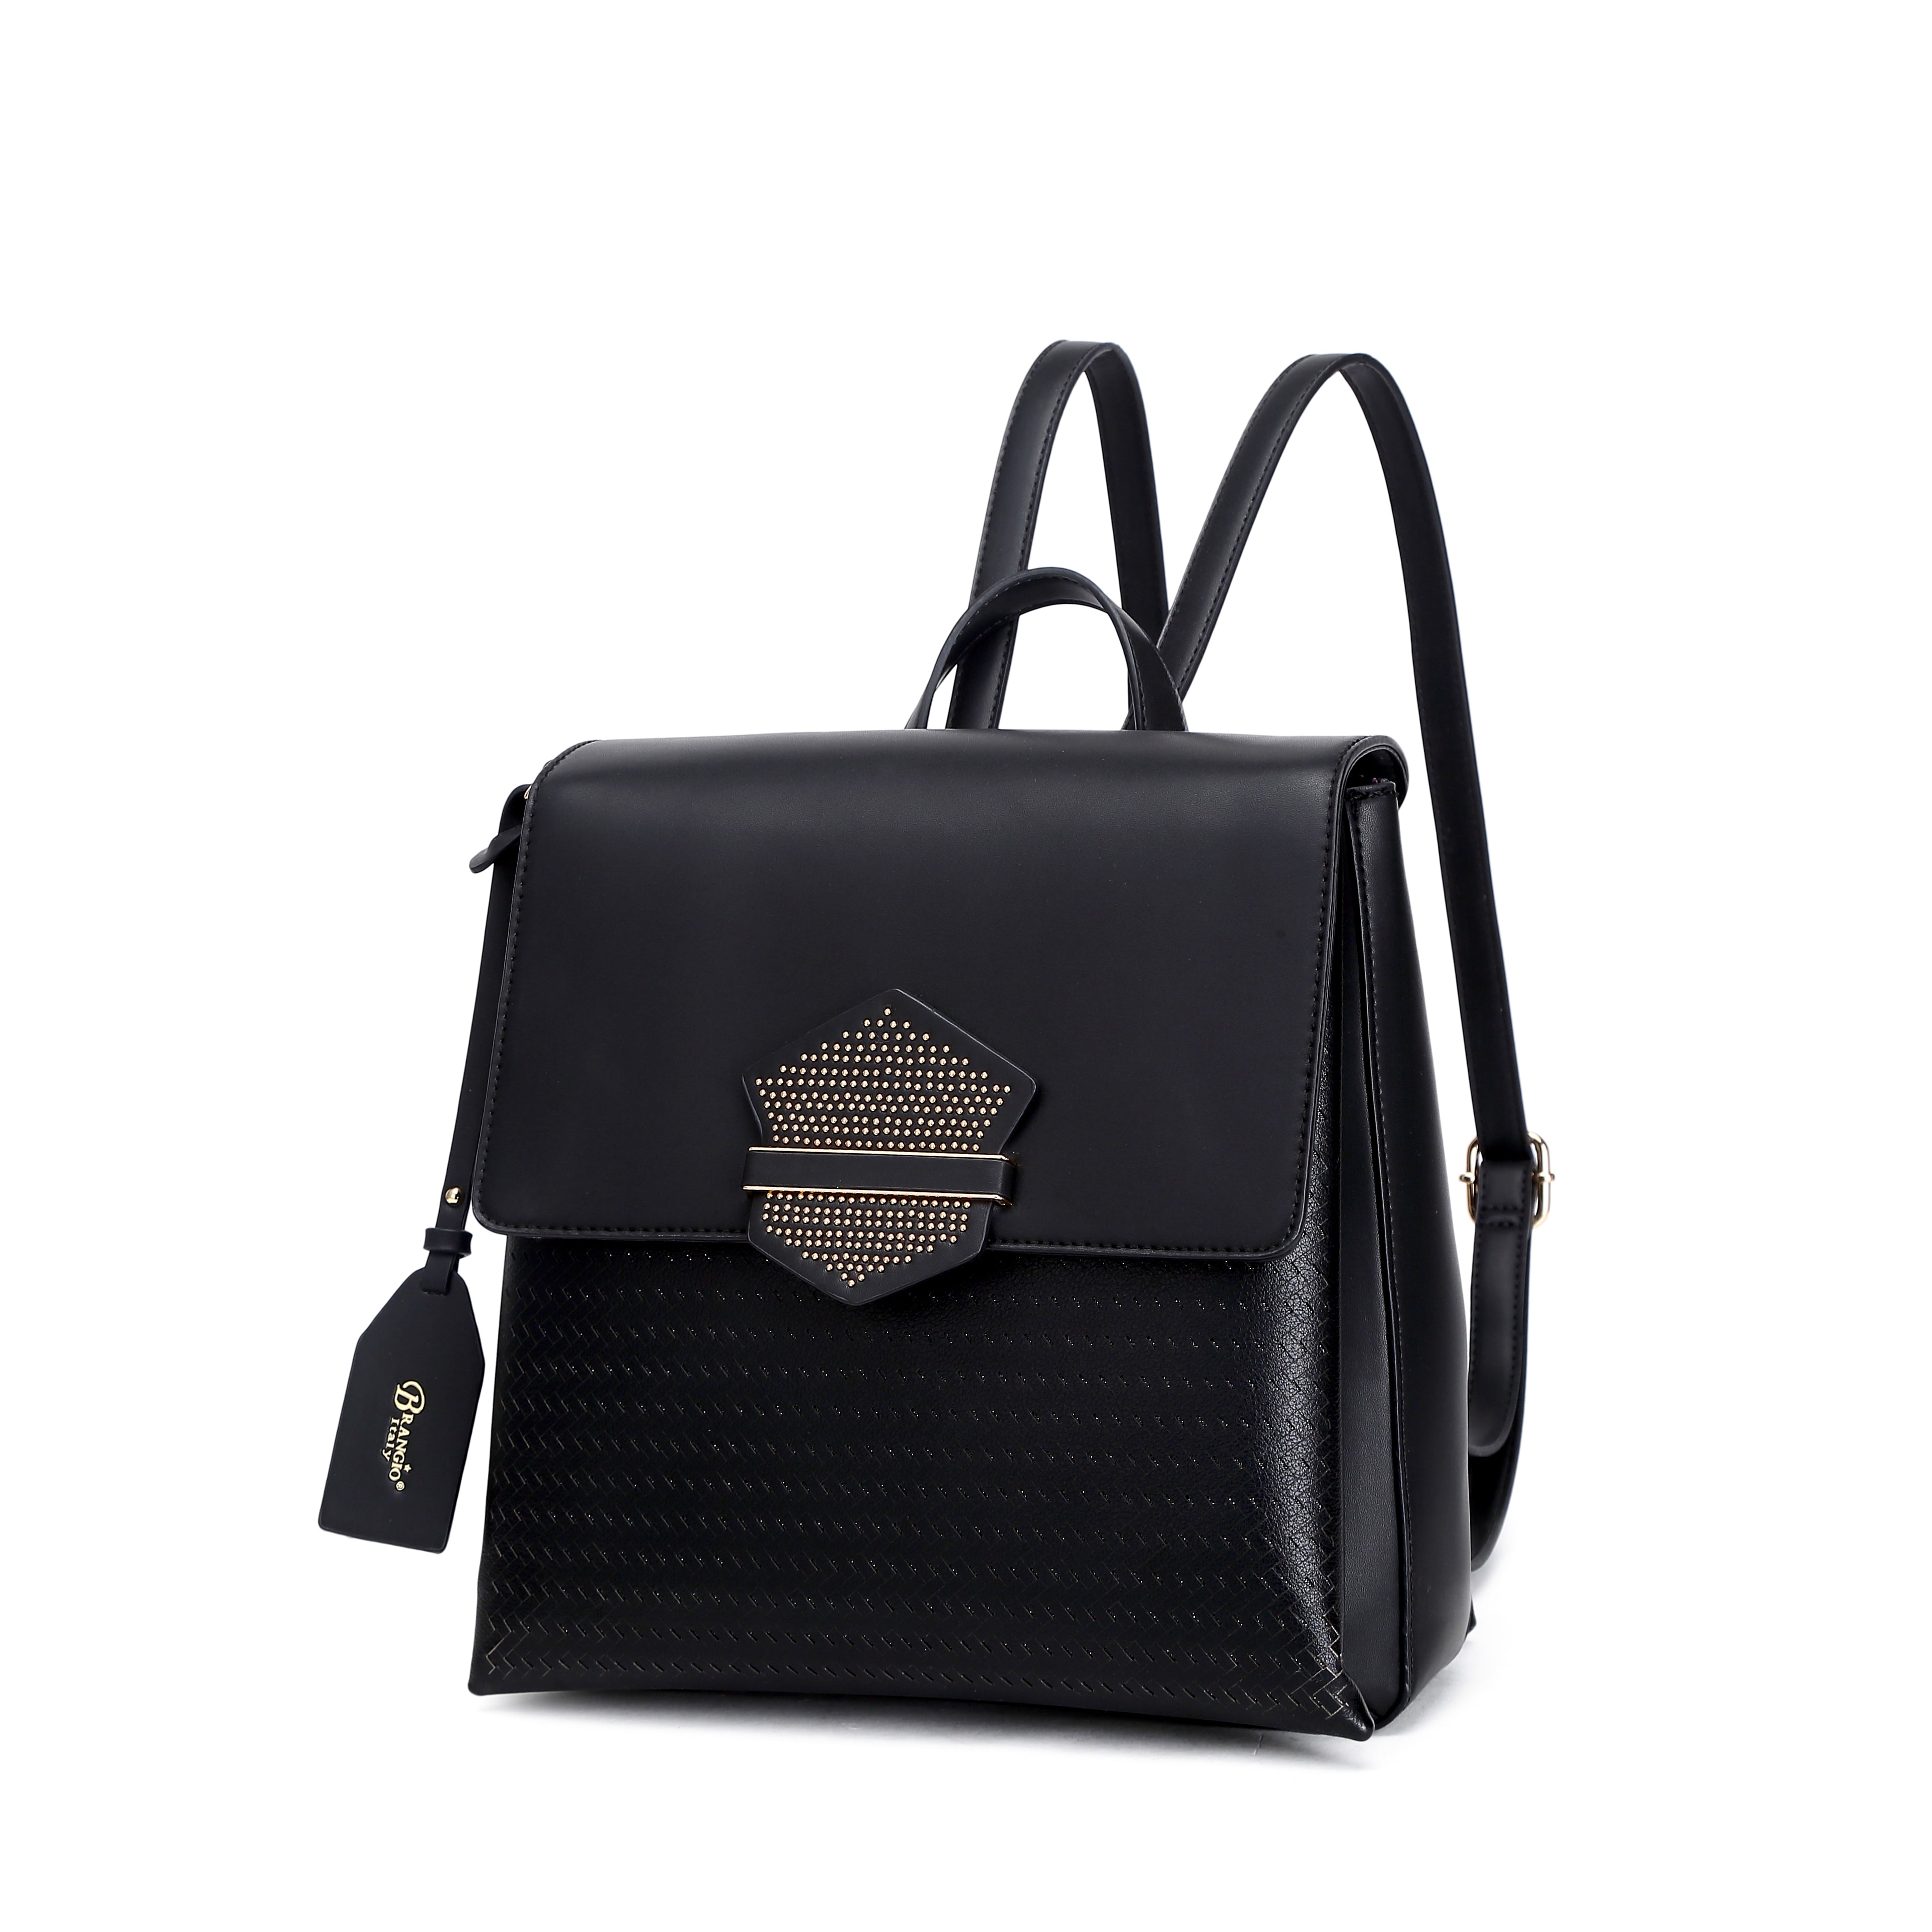 Metallic Minimal Modern Luxury Backpack for Work Travel Gift